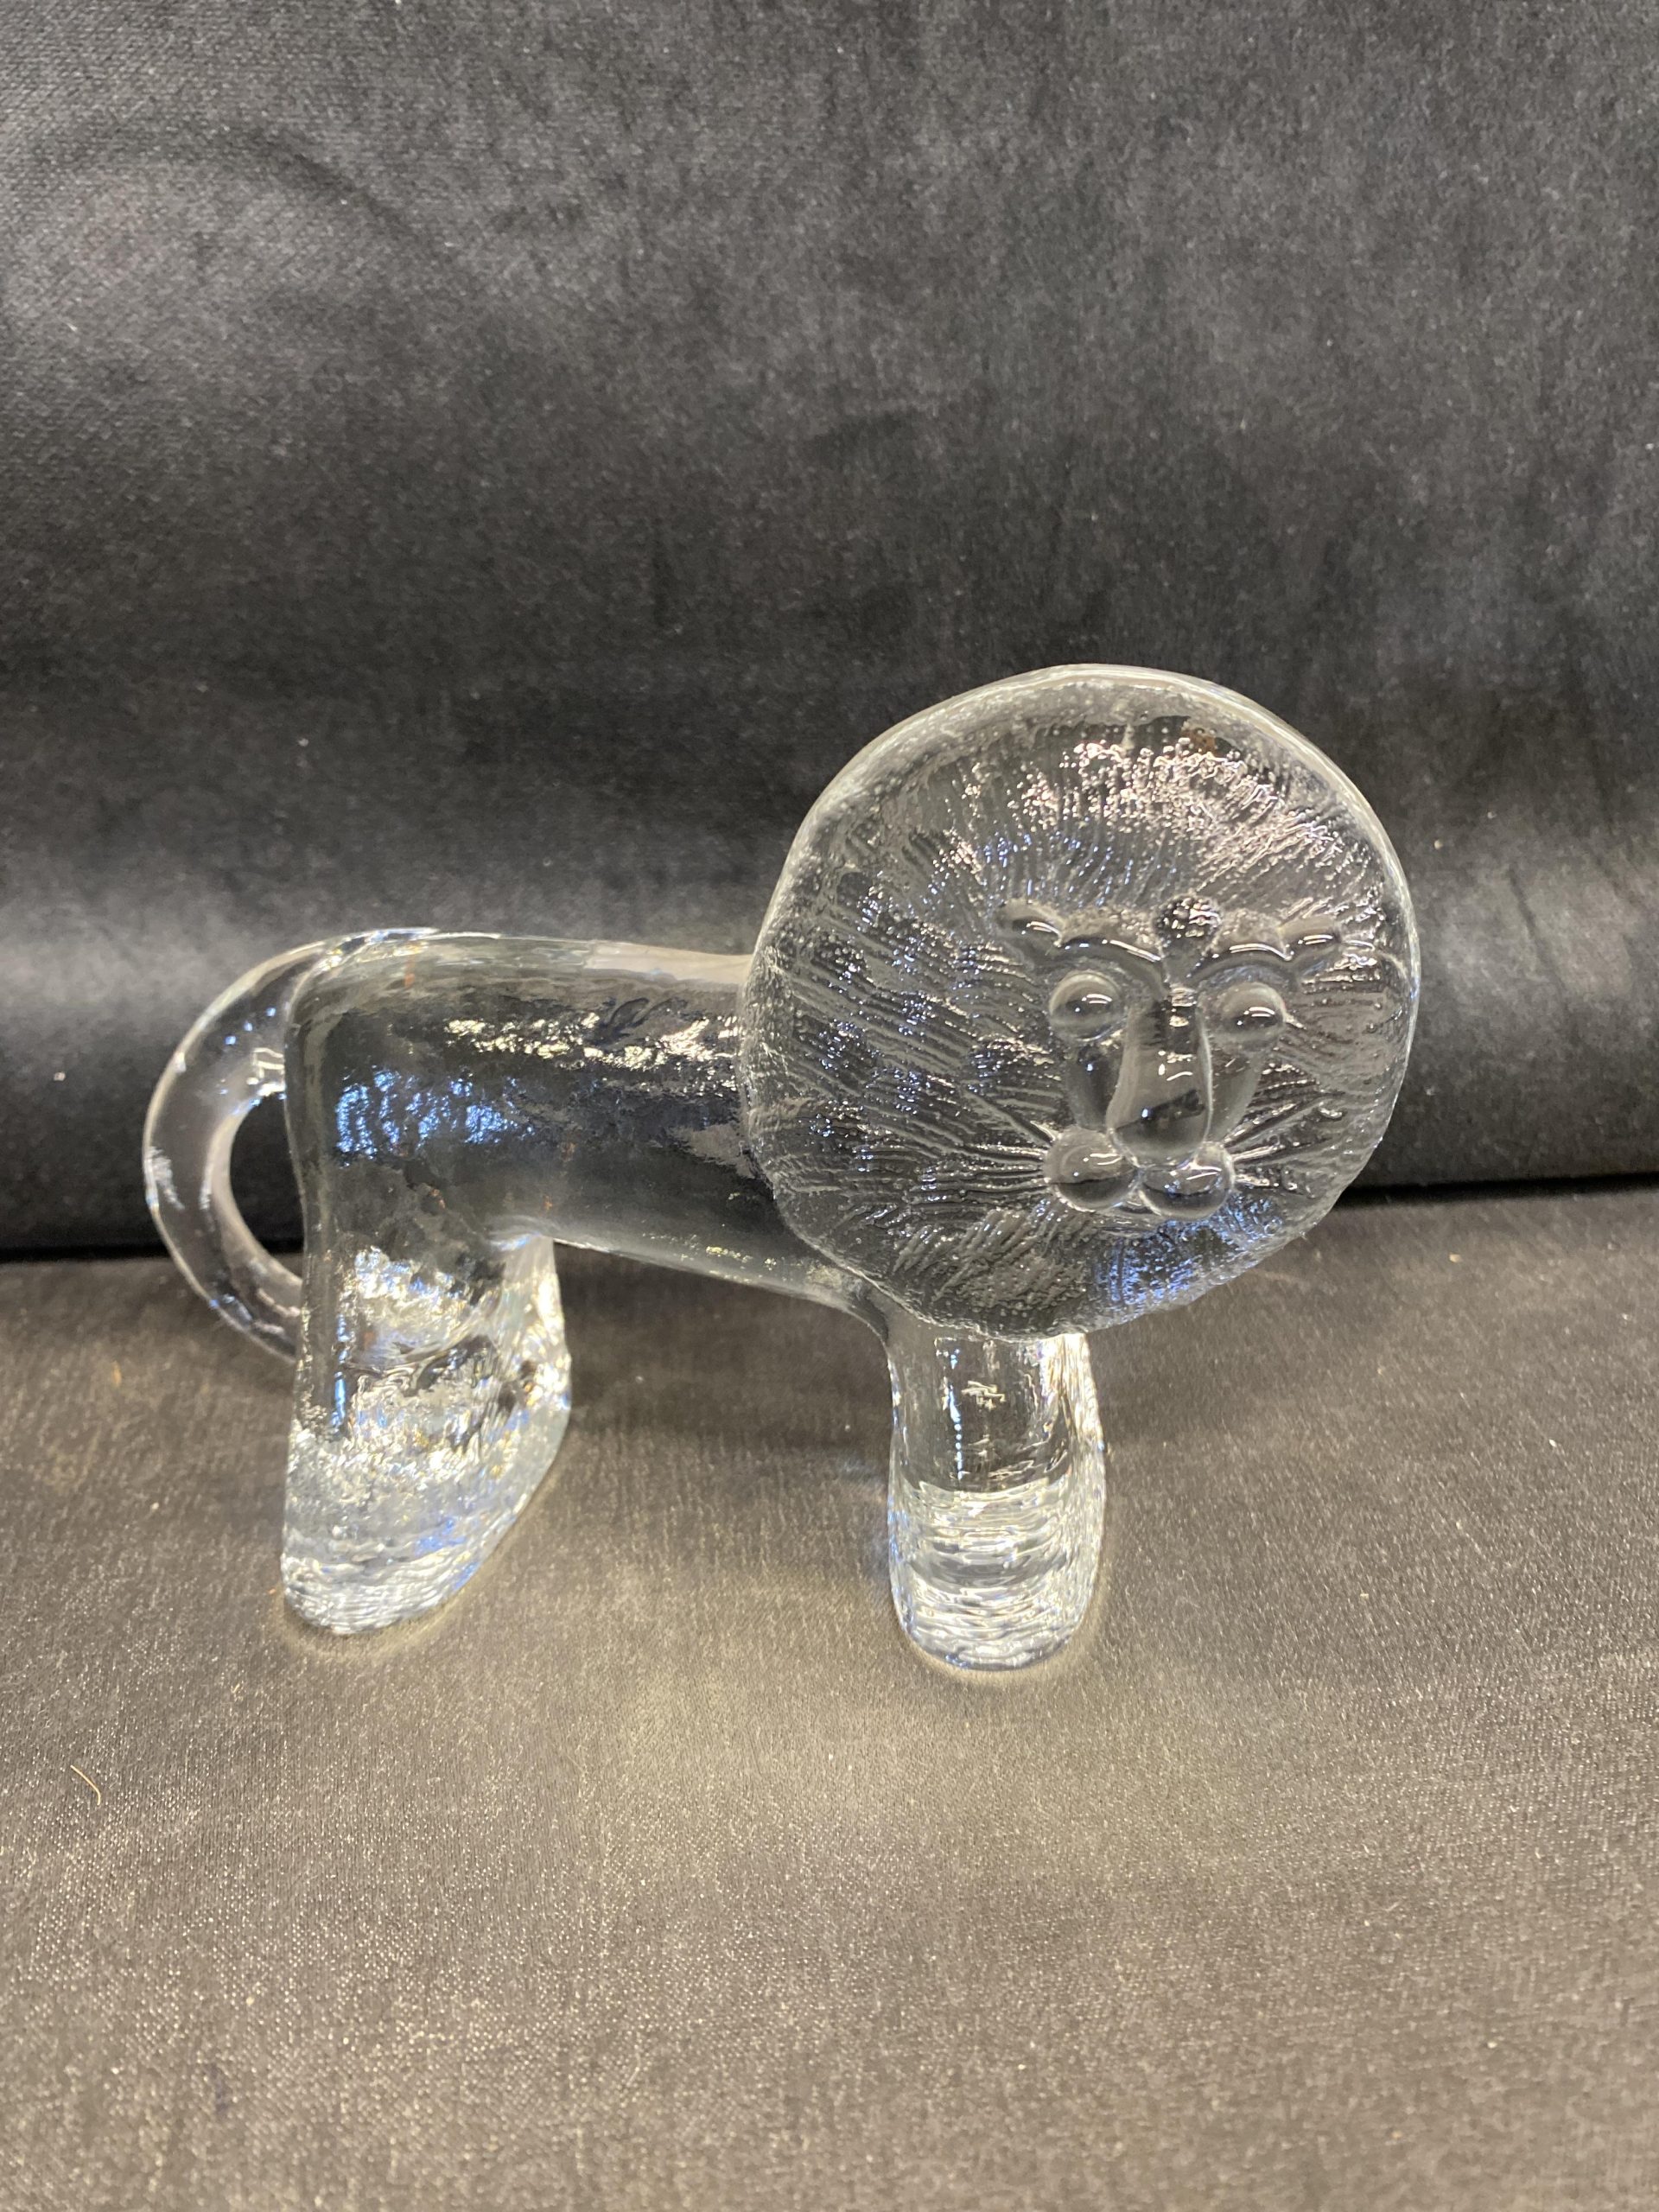 Boda Zoo Glass Figurine – Small Lion